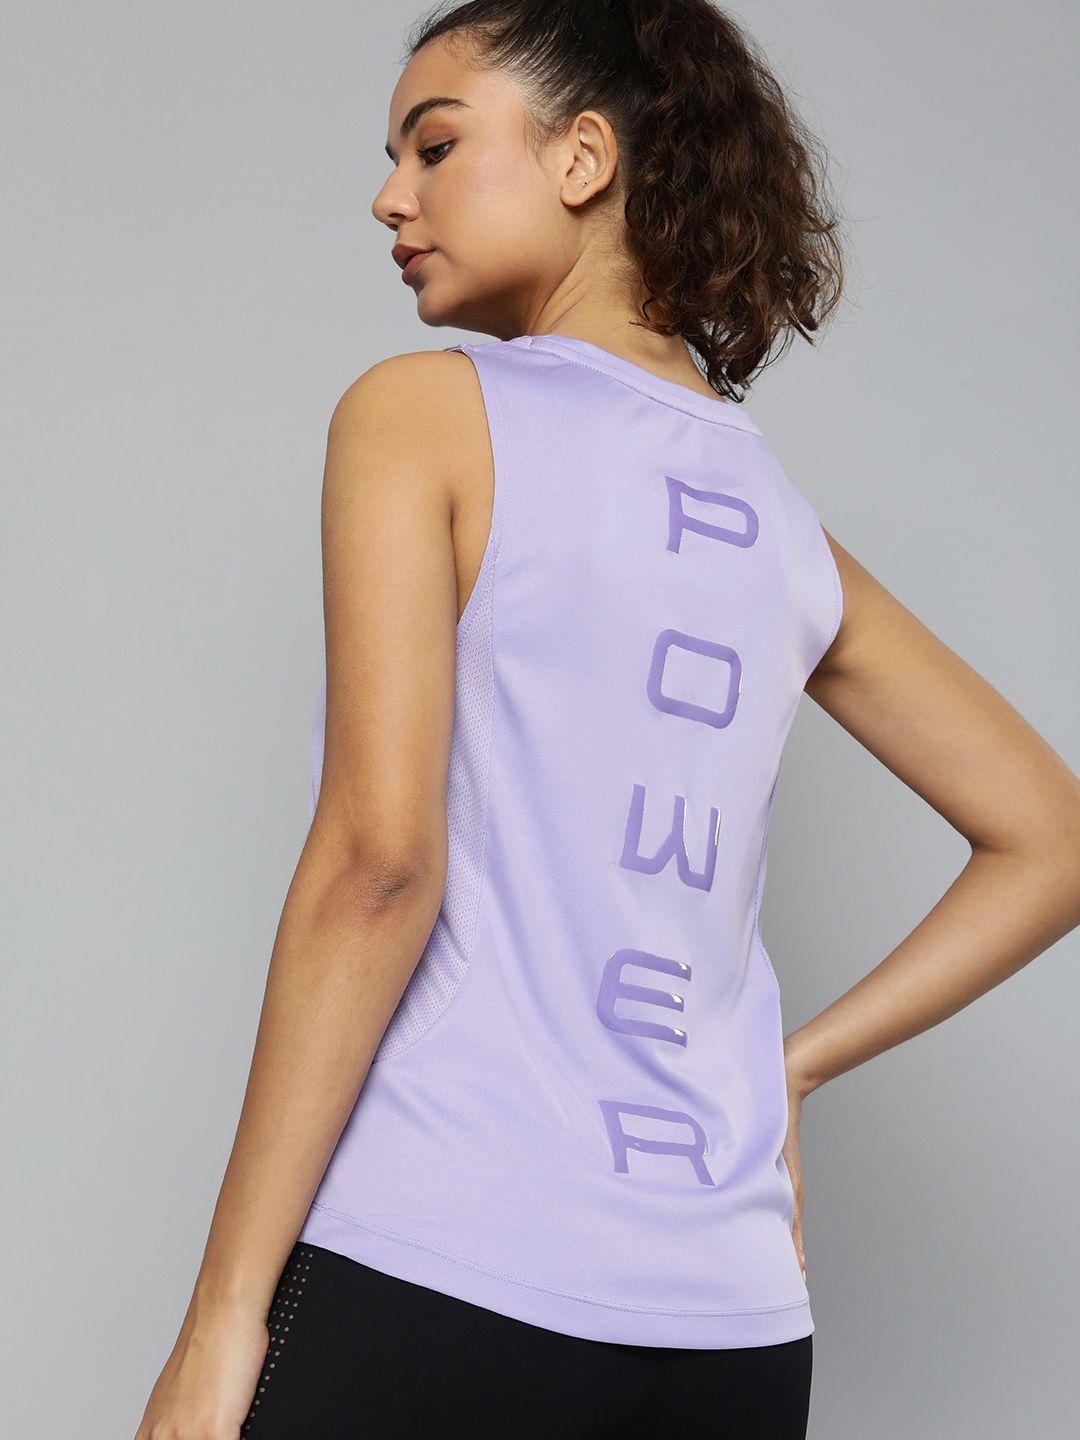 hrx by hrithik roshan training women digital lavender rapid-dry typography top